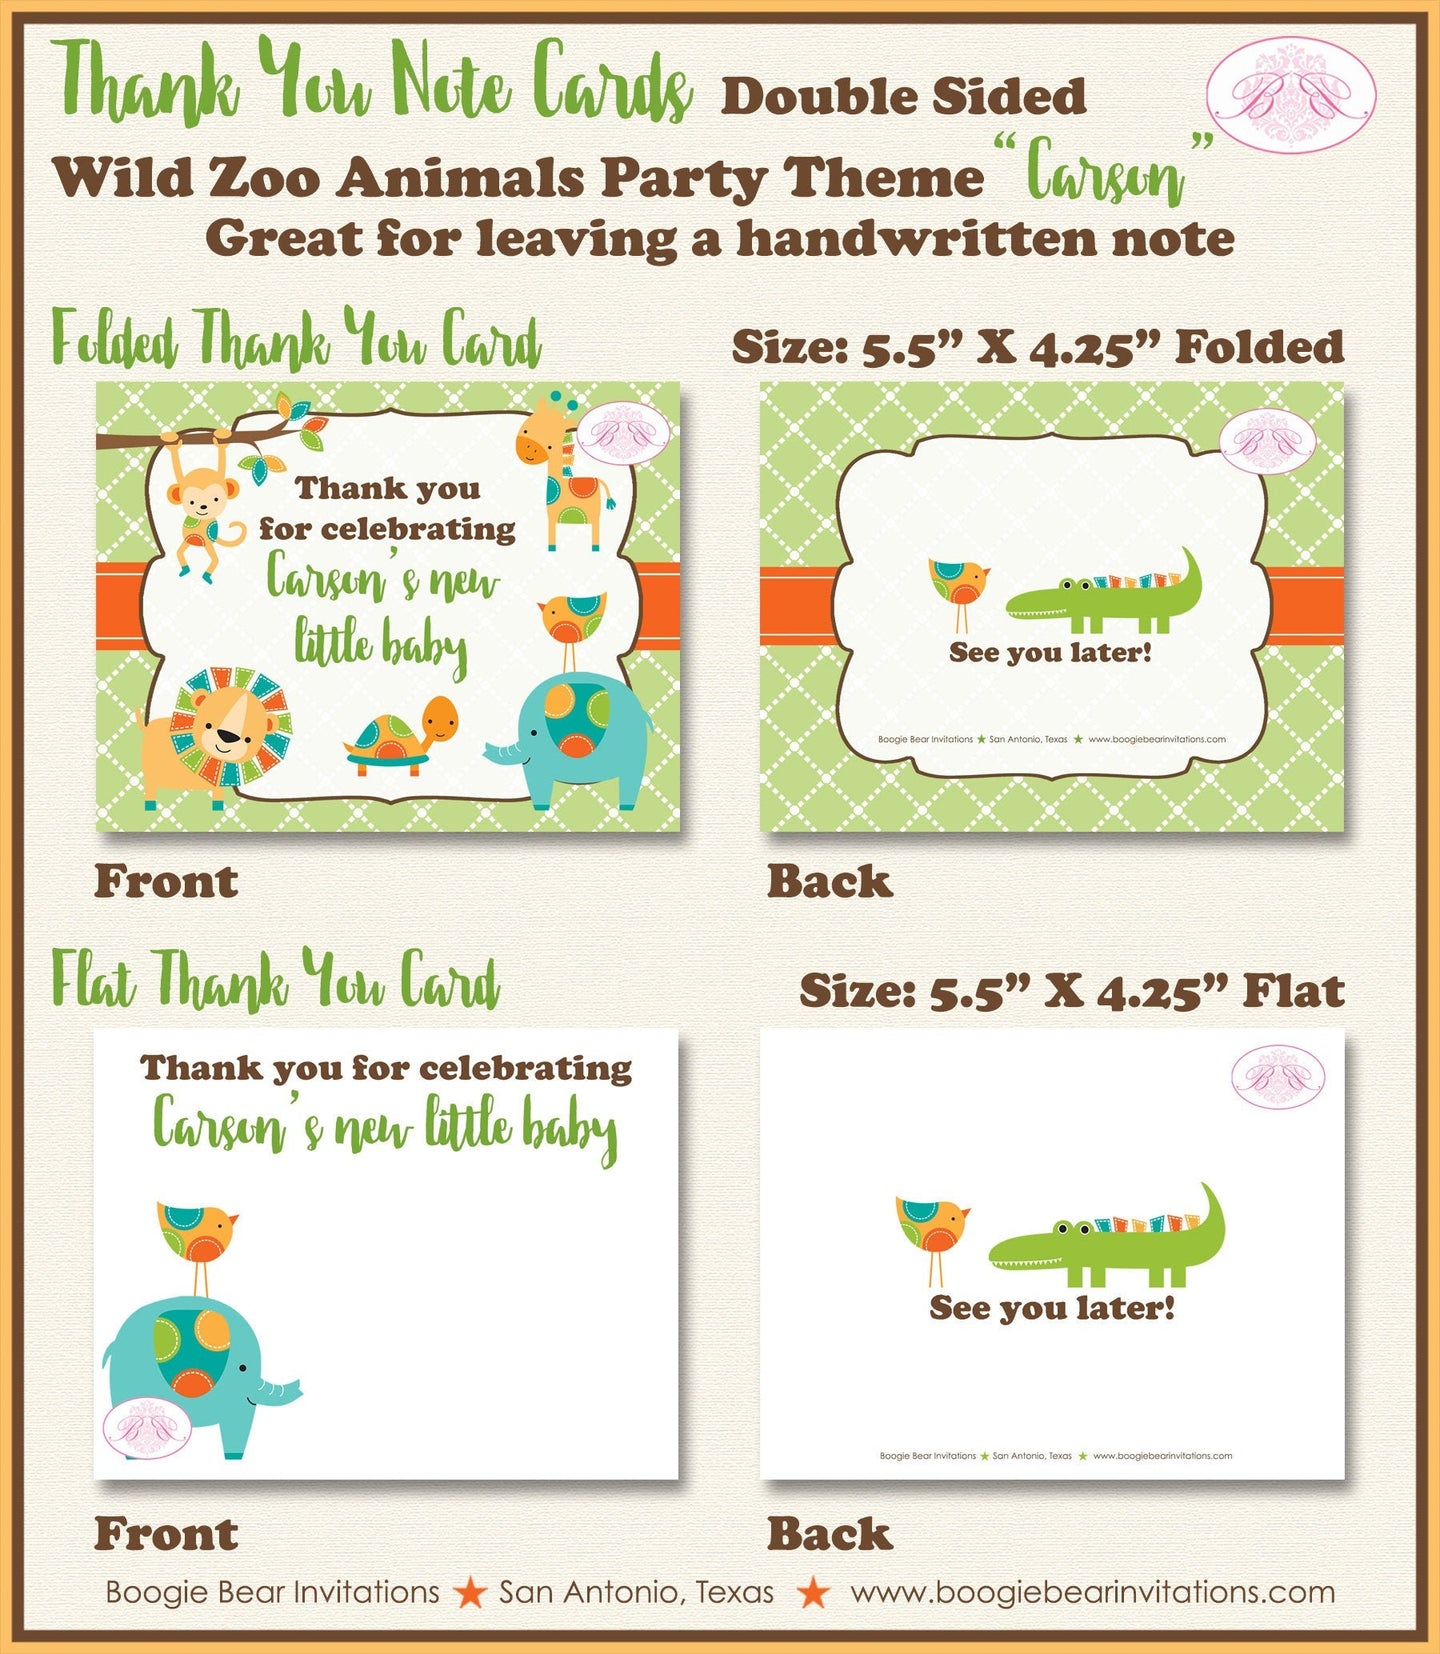 Wild Zoo Animals Party Thank You Card Favor Note Baby Shower Party Boy Girl Monkey Giraffe Bird Boogie Bear Invitations Carson Theme Printed